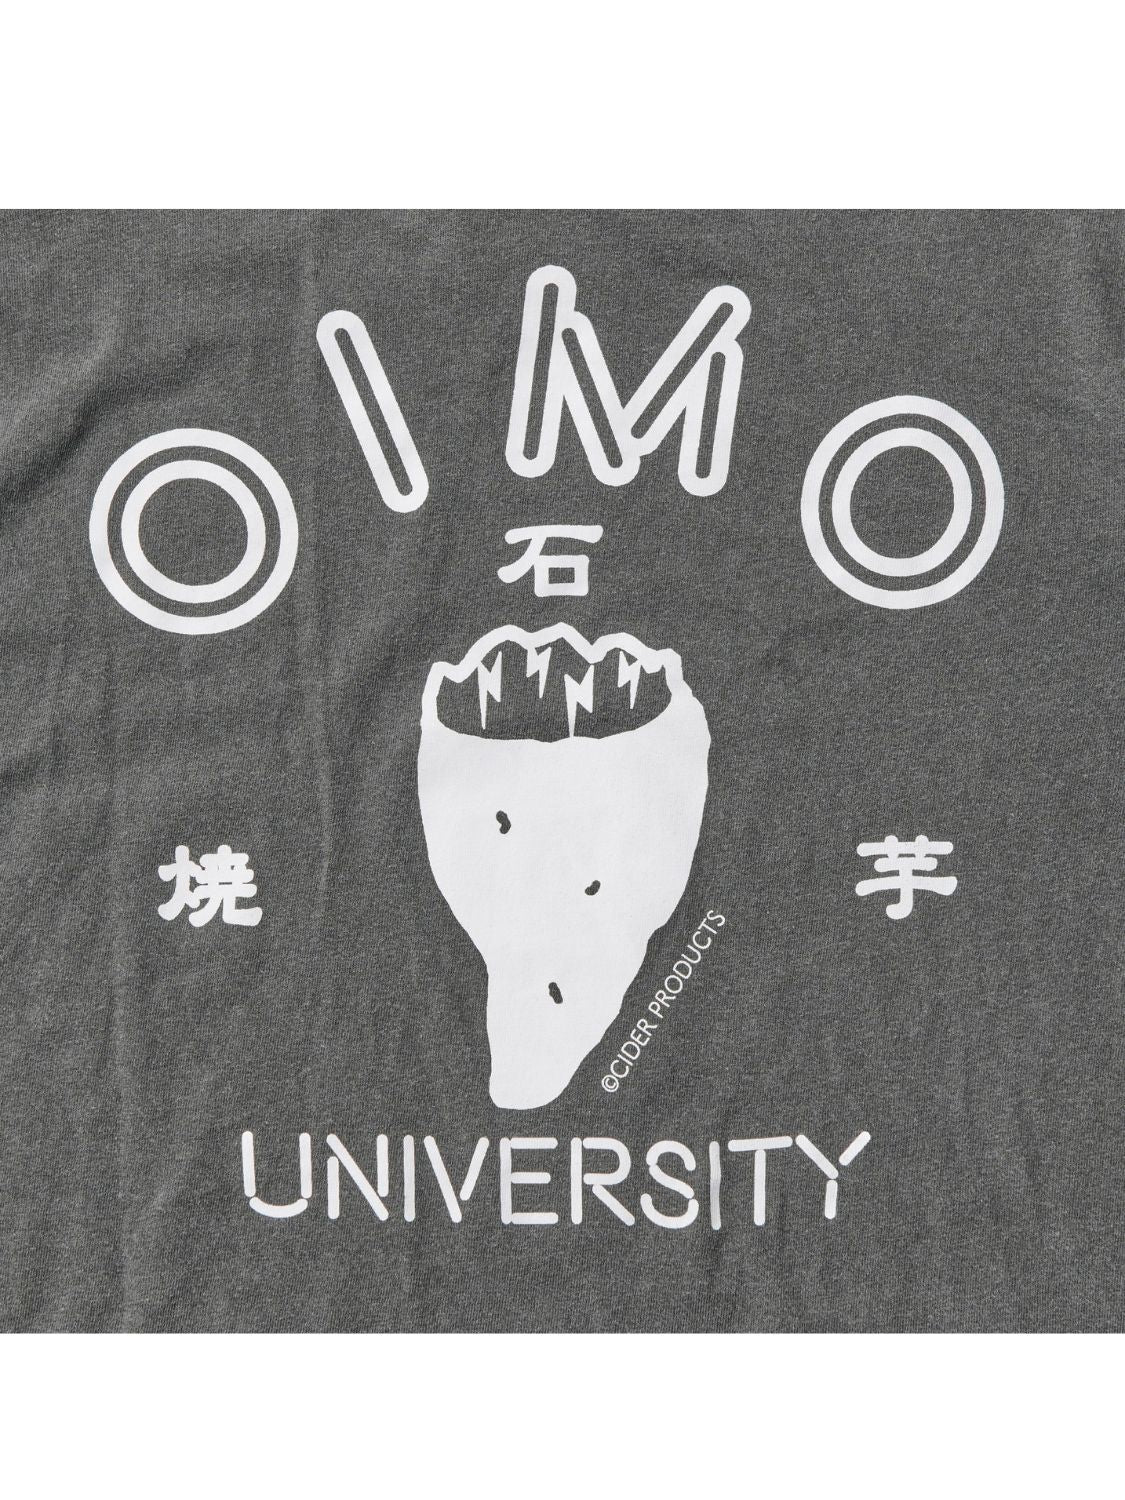 OIMO UNIV. Tshirt / グレー